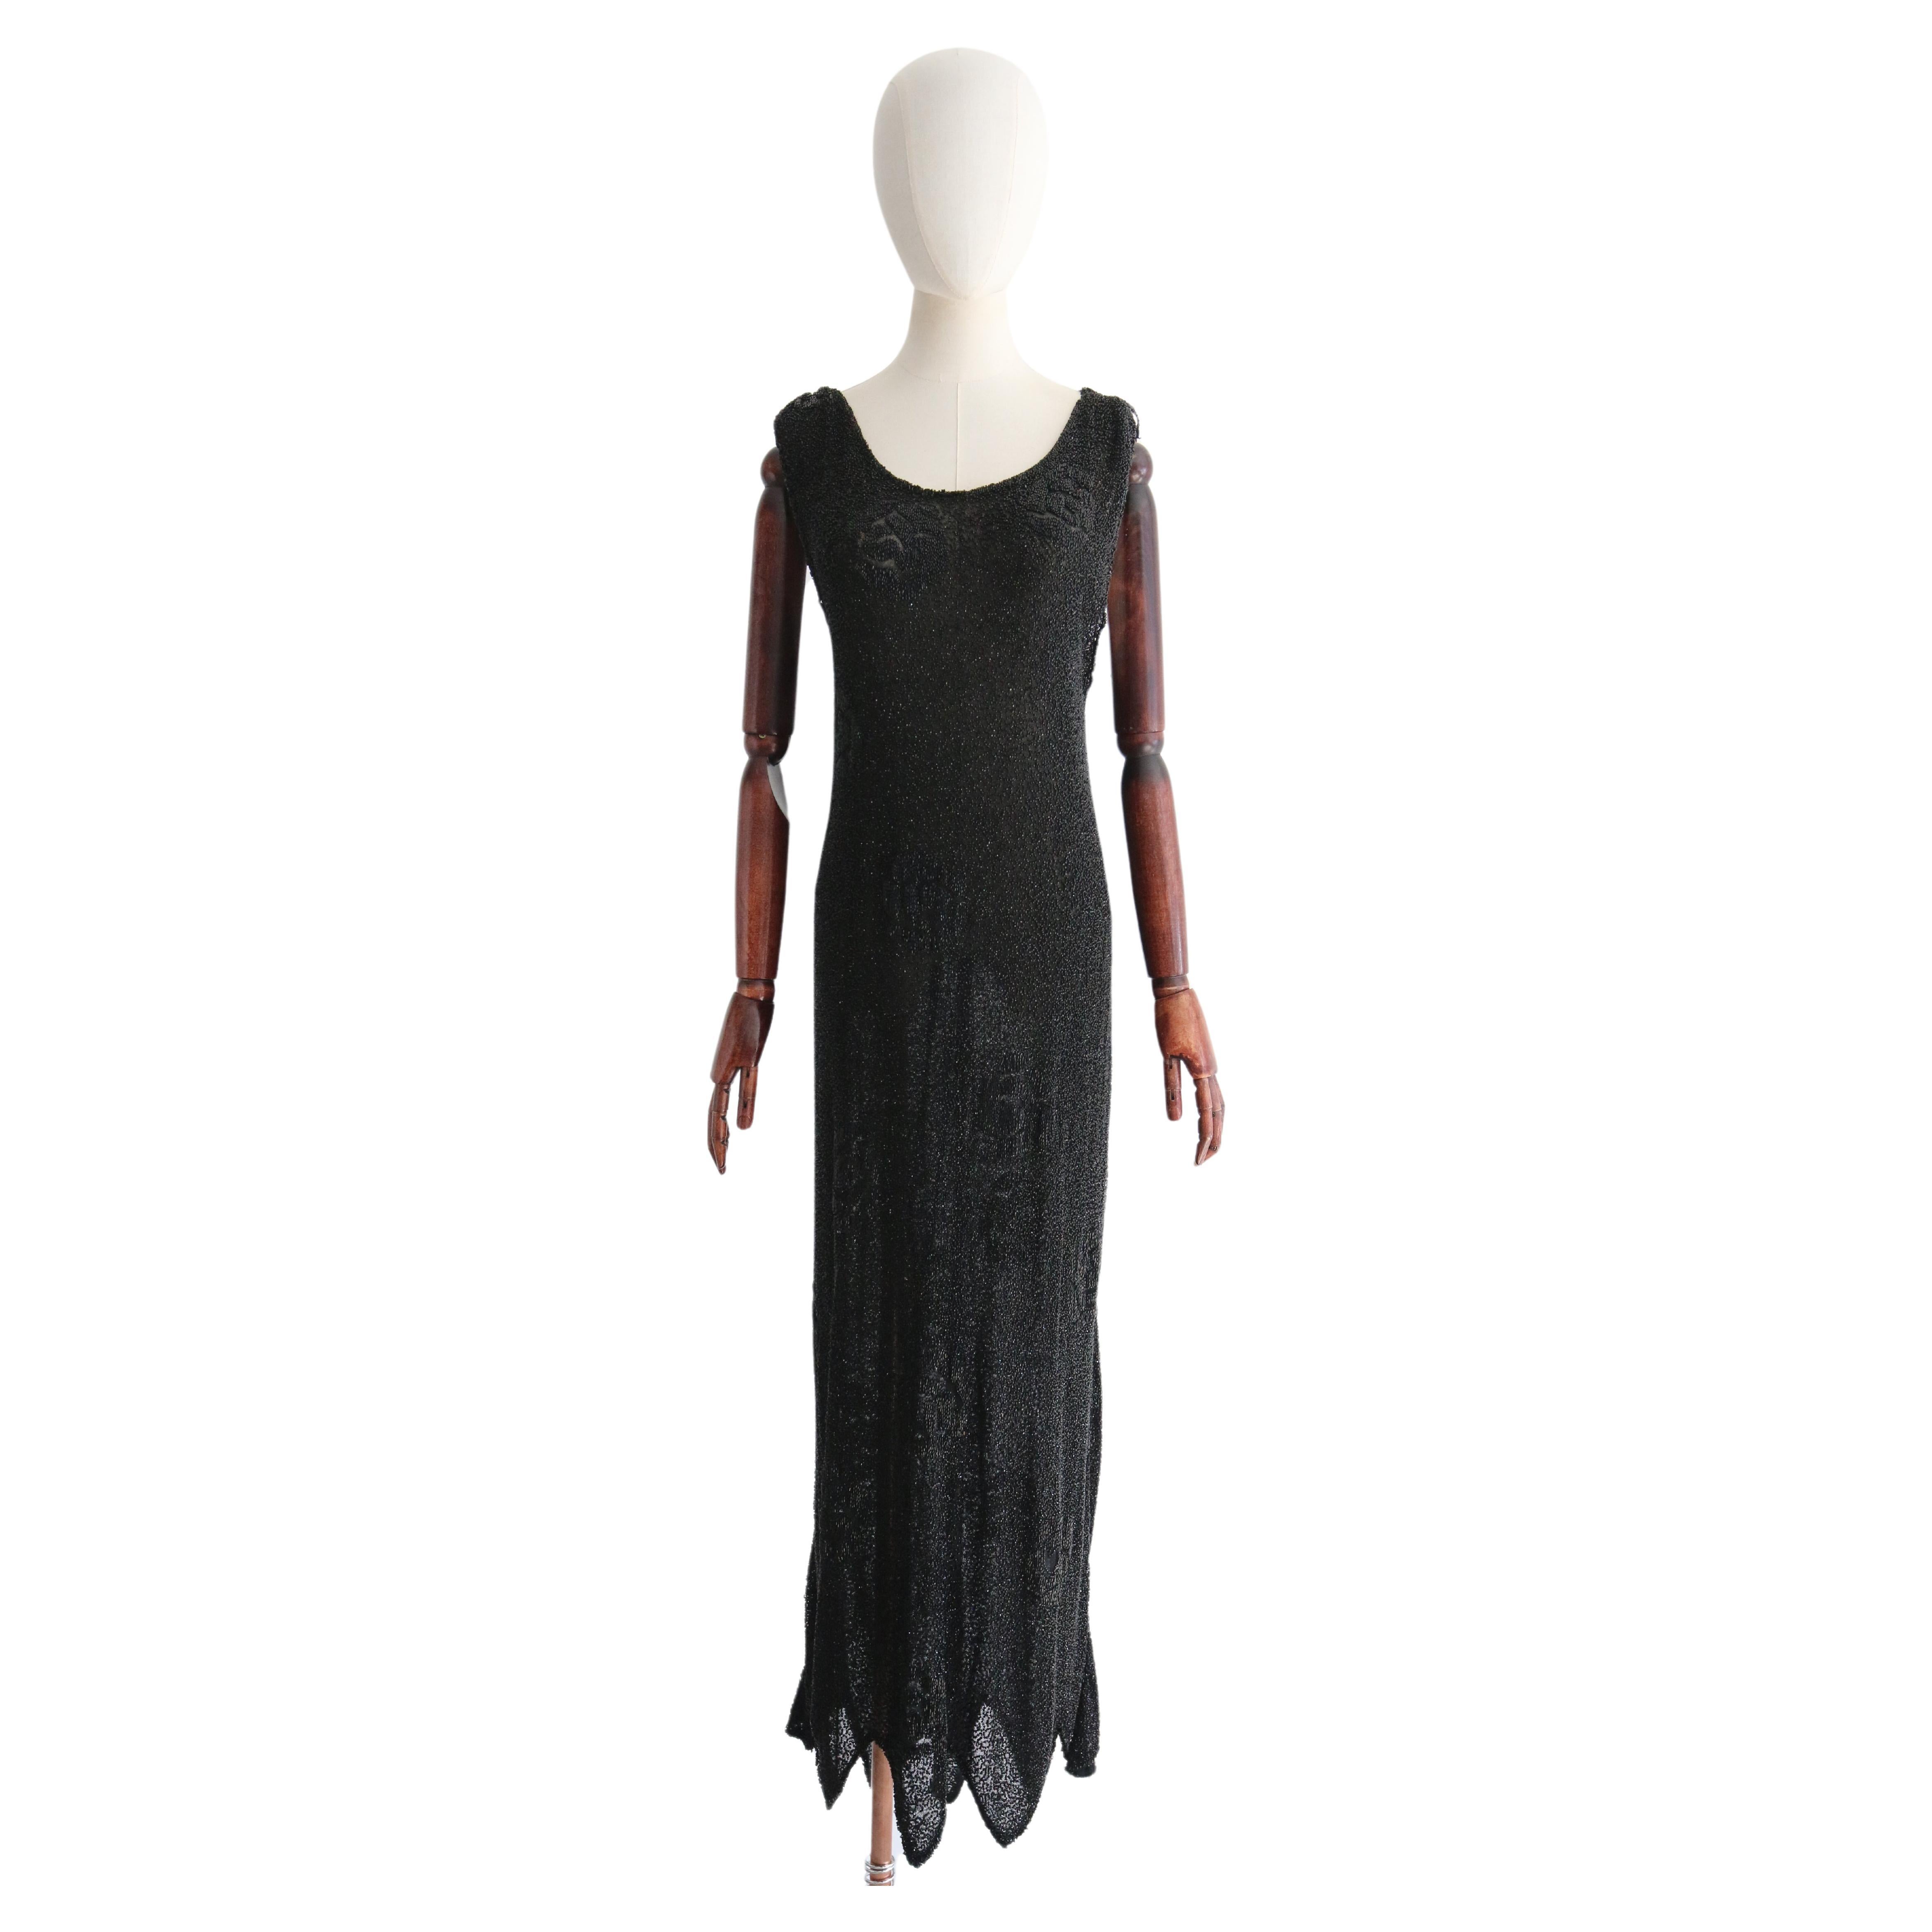 Vintage 1920's Black Beaded Evening Dress UK 12-14 US 8-10